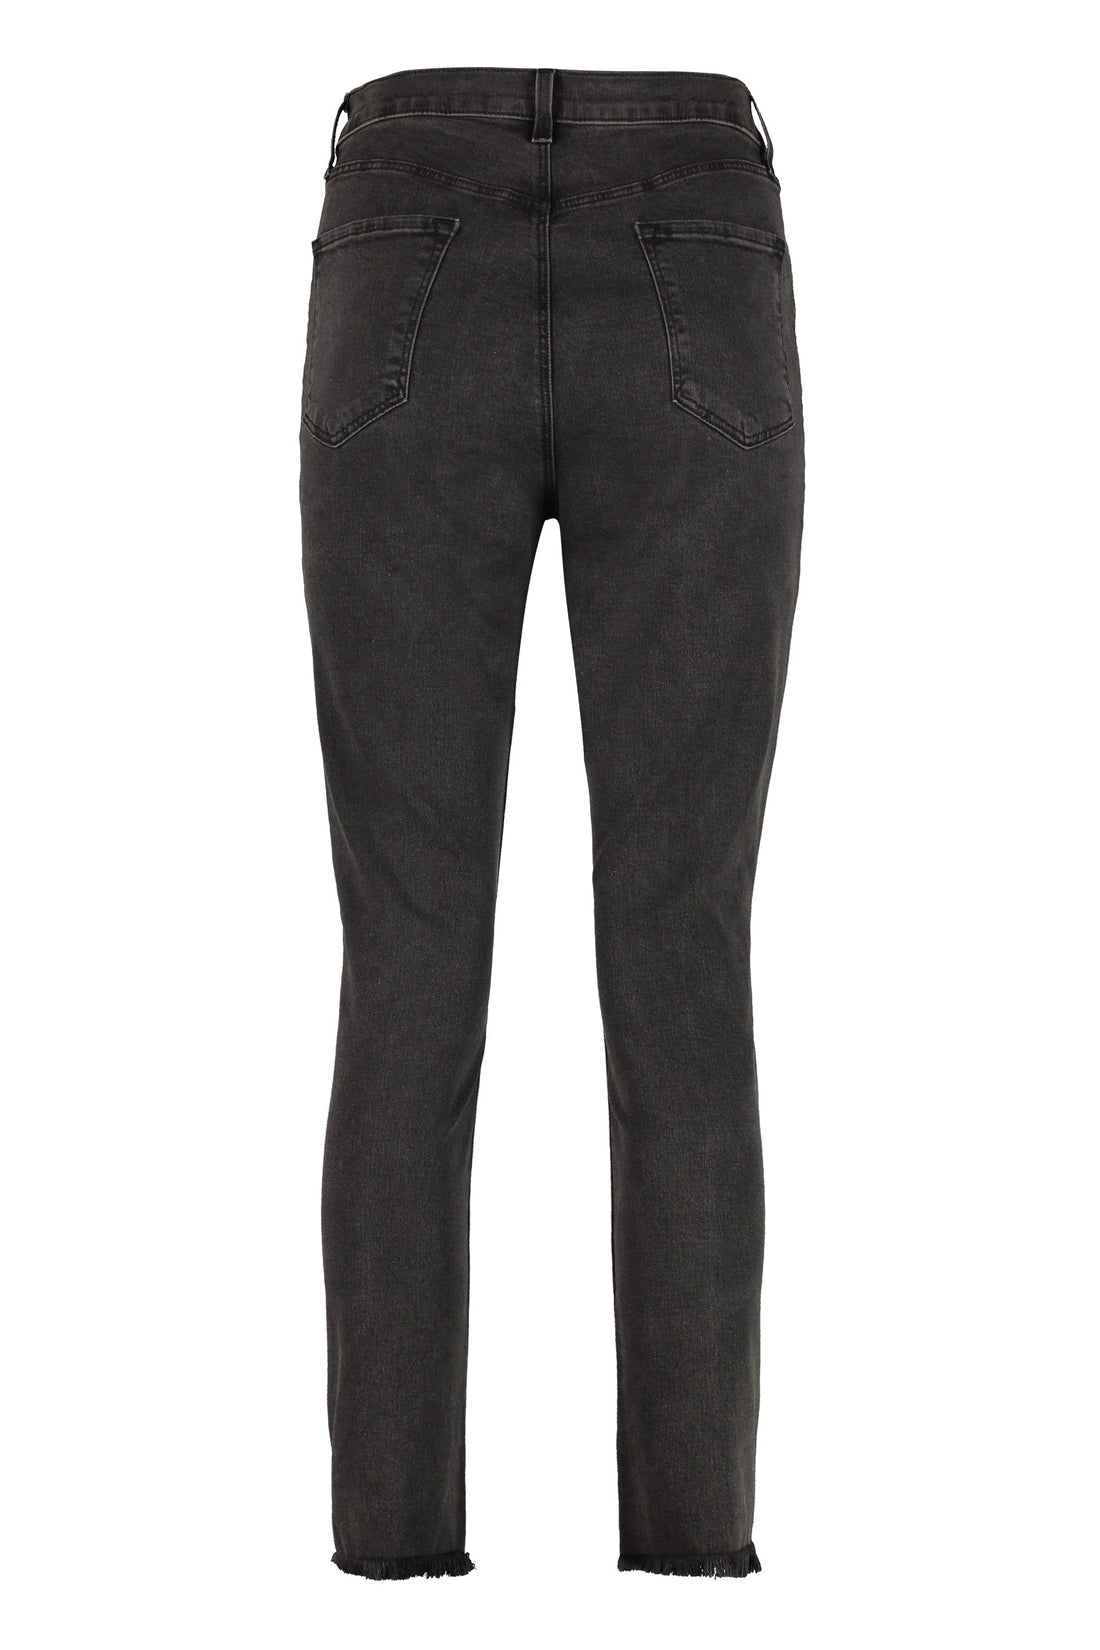 J Brand-OUTLET-SALE-Leenah high-rise skinny jeans-ARCHIVIST